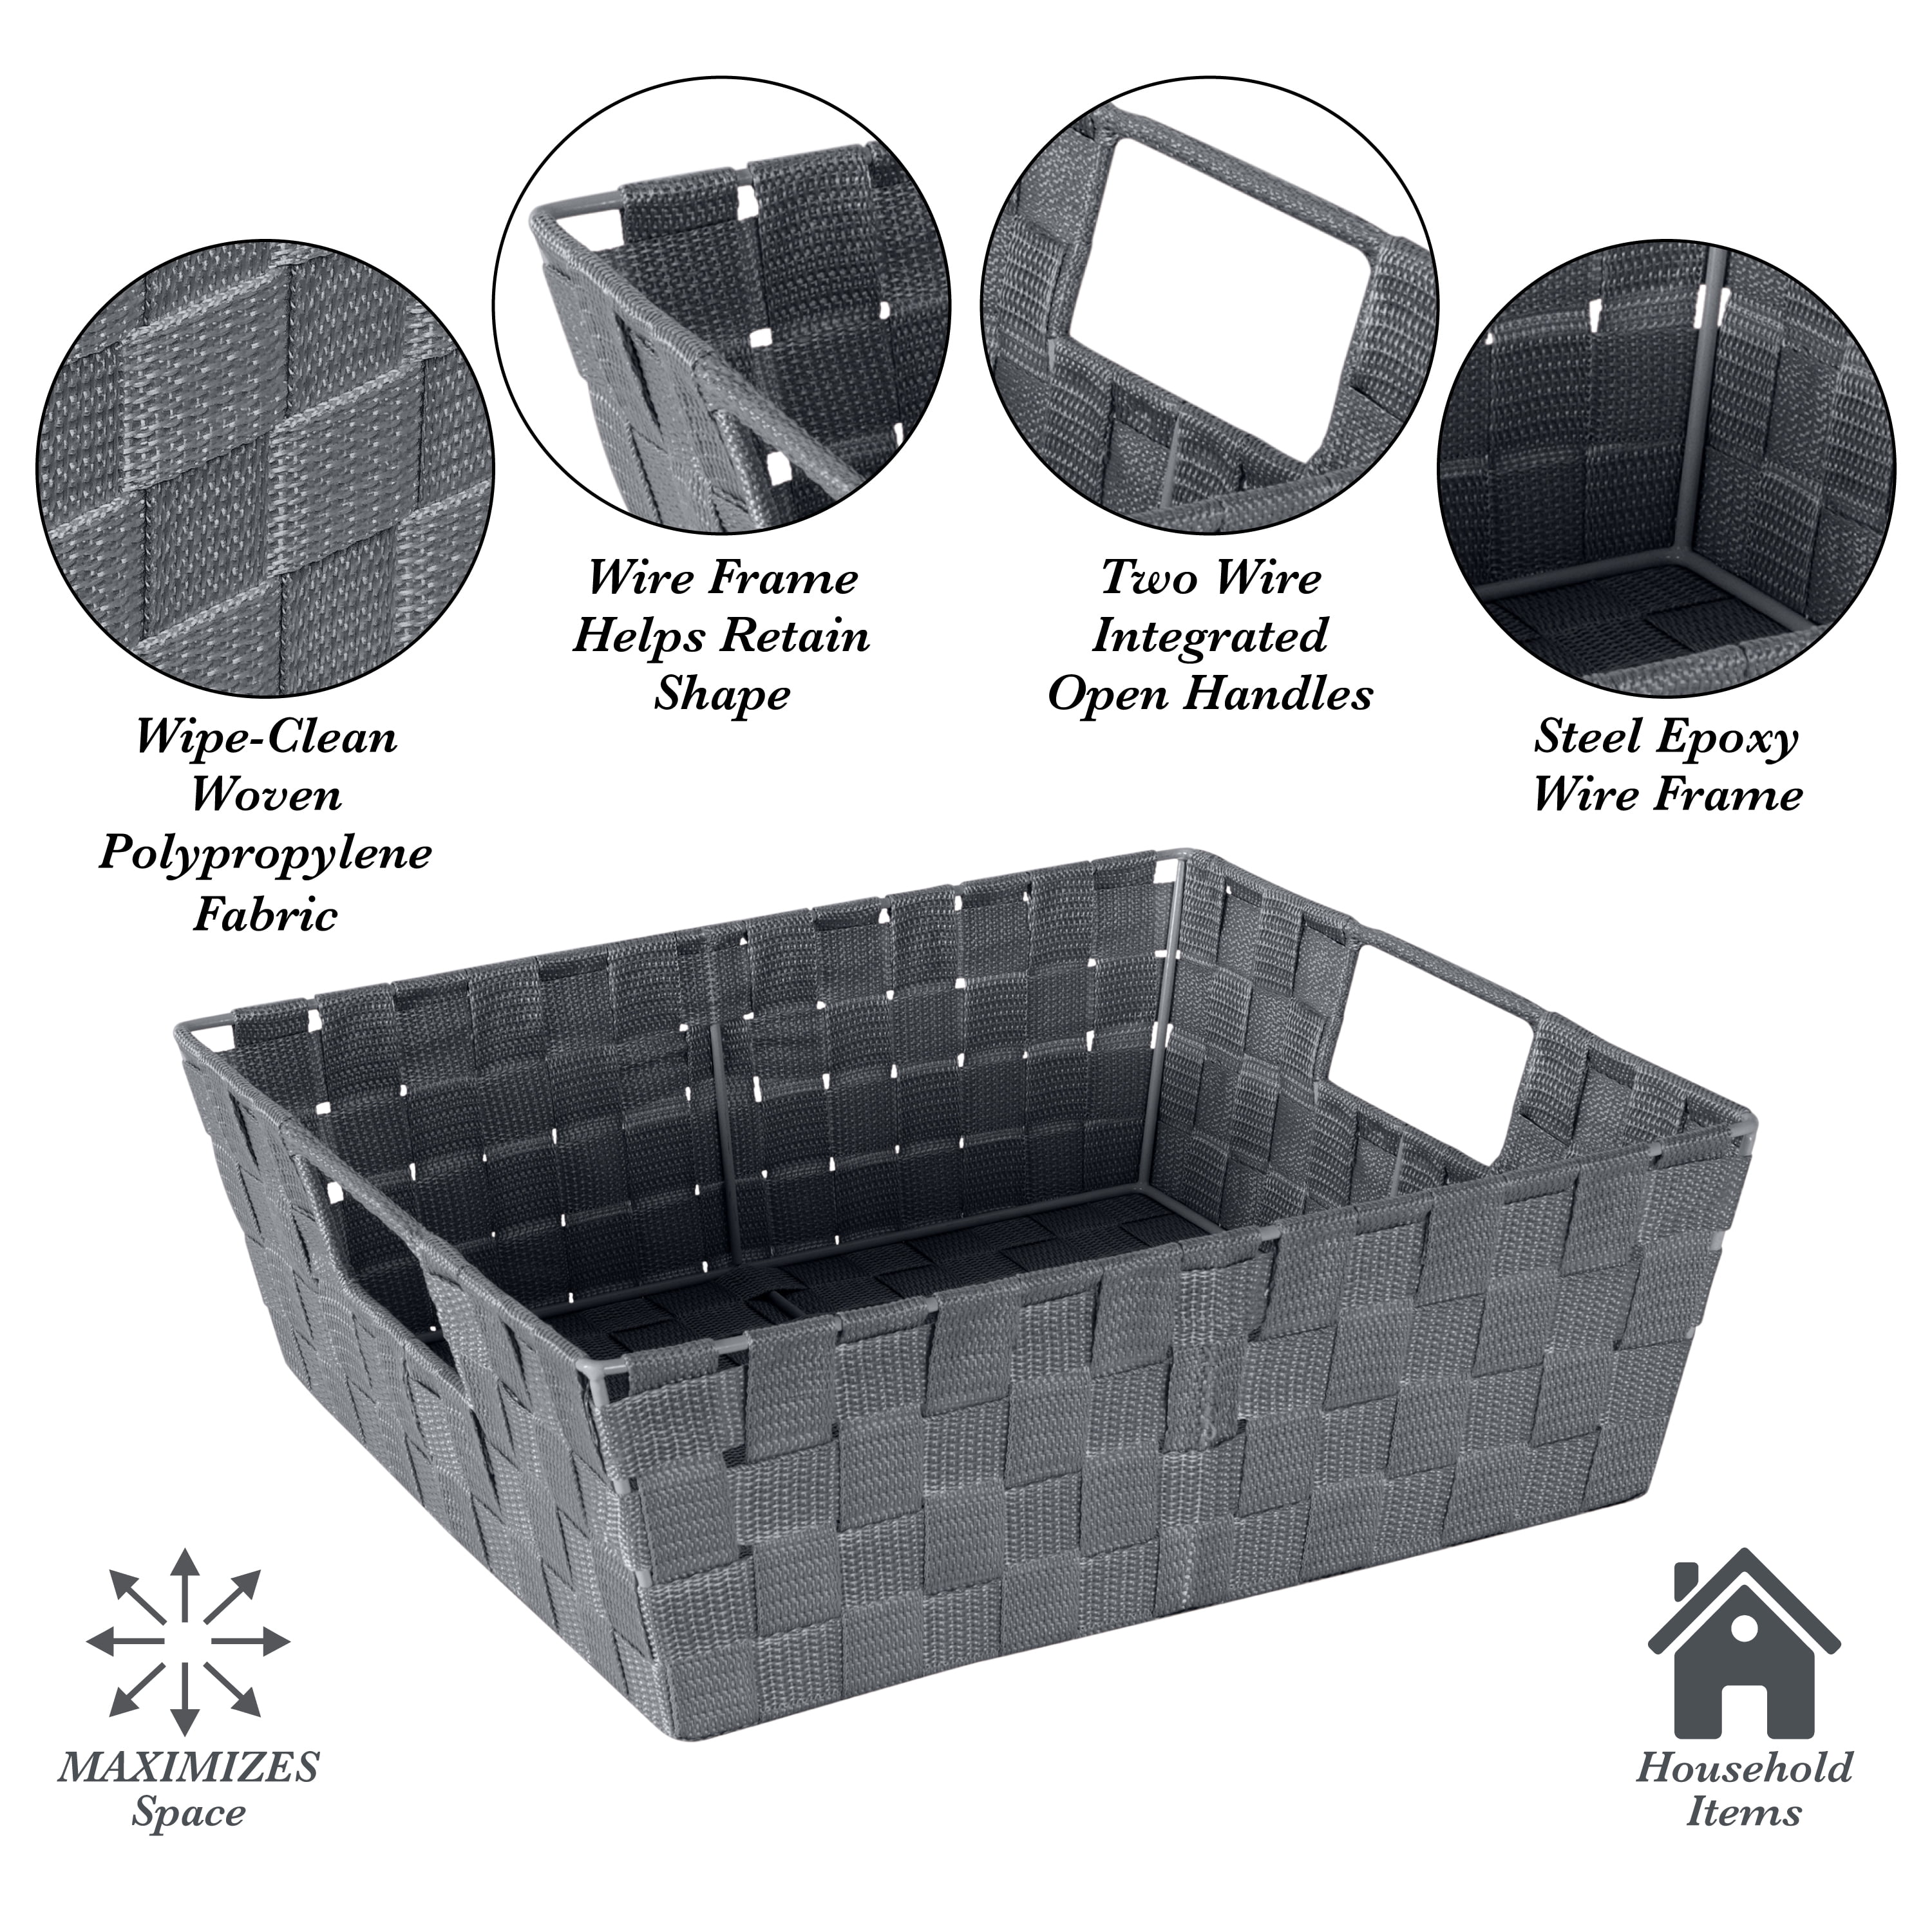 Simplify 12 x 10 Gray Boho Storage Box With Handle